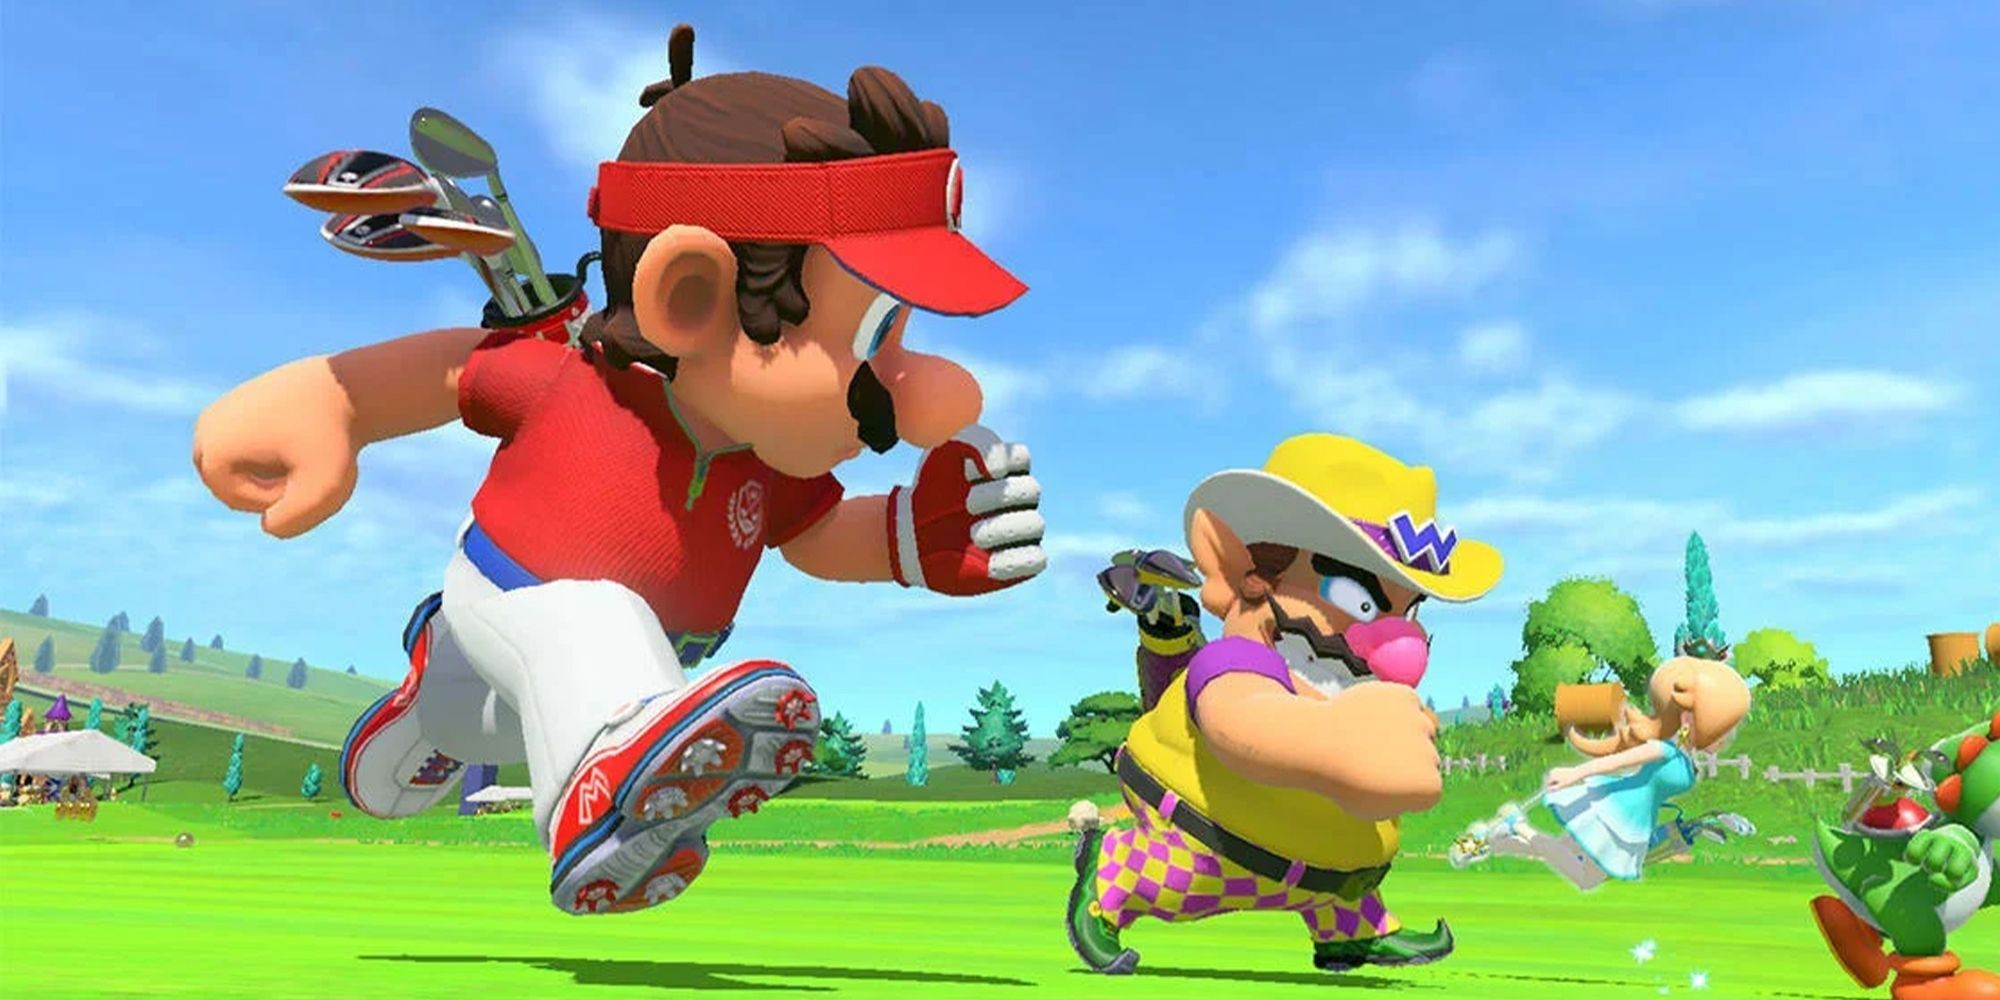 Mario and Wario running in Mario Golf Super Rush